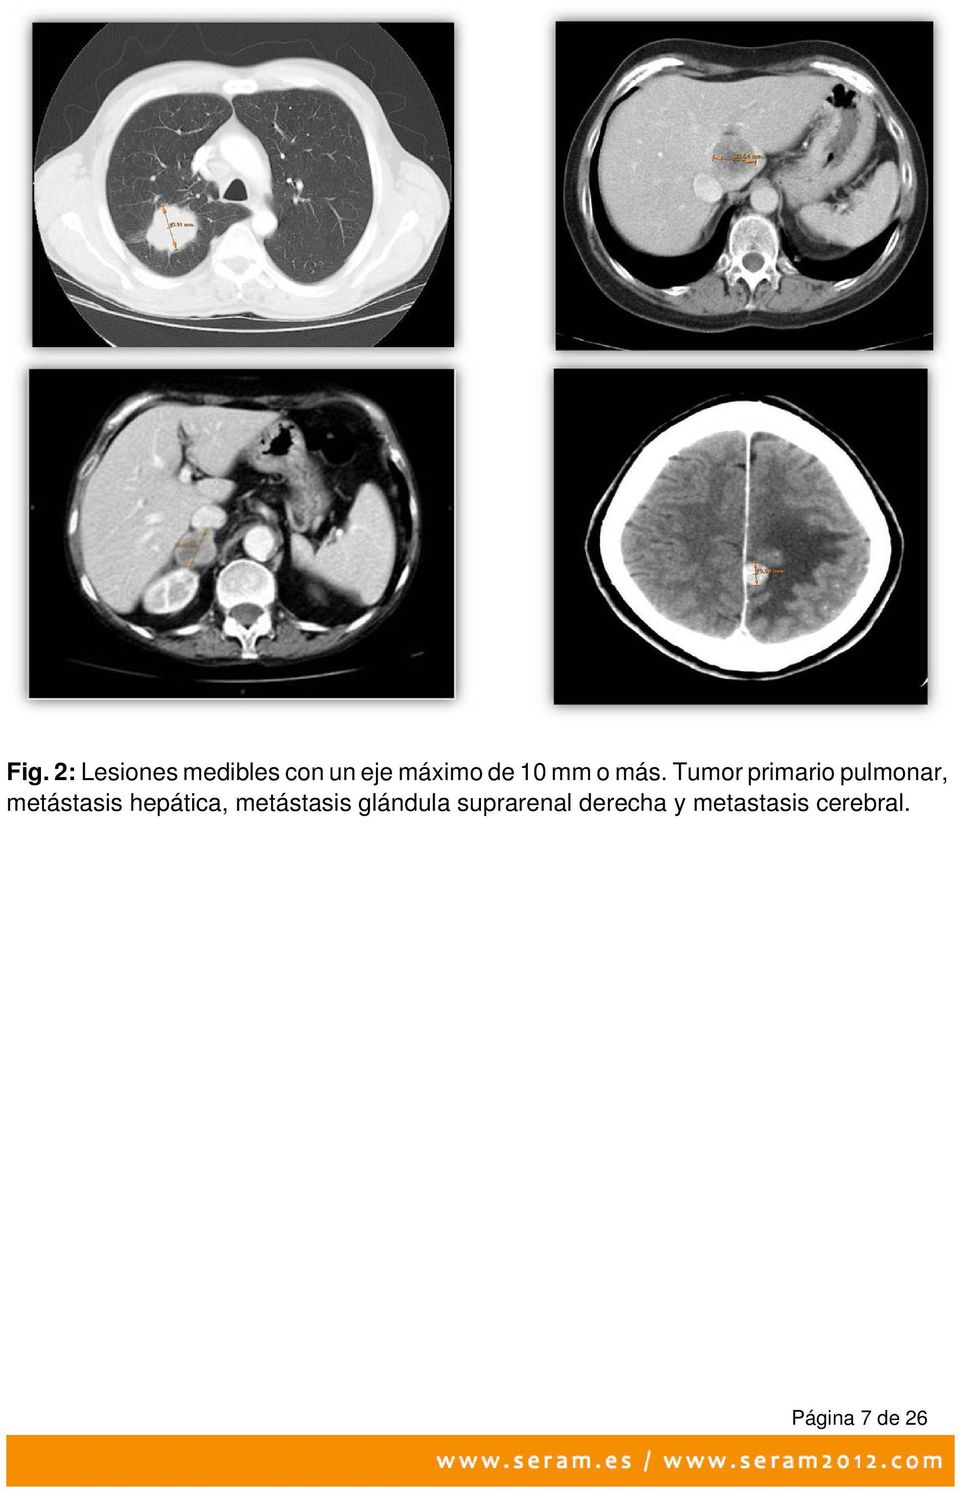 Tumor primario pulmonar, metástasis hepática,